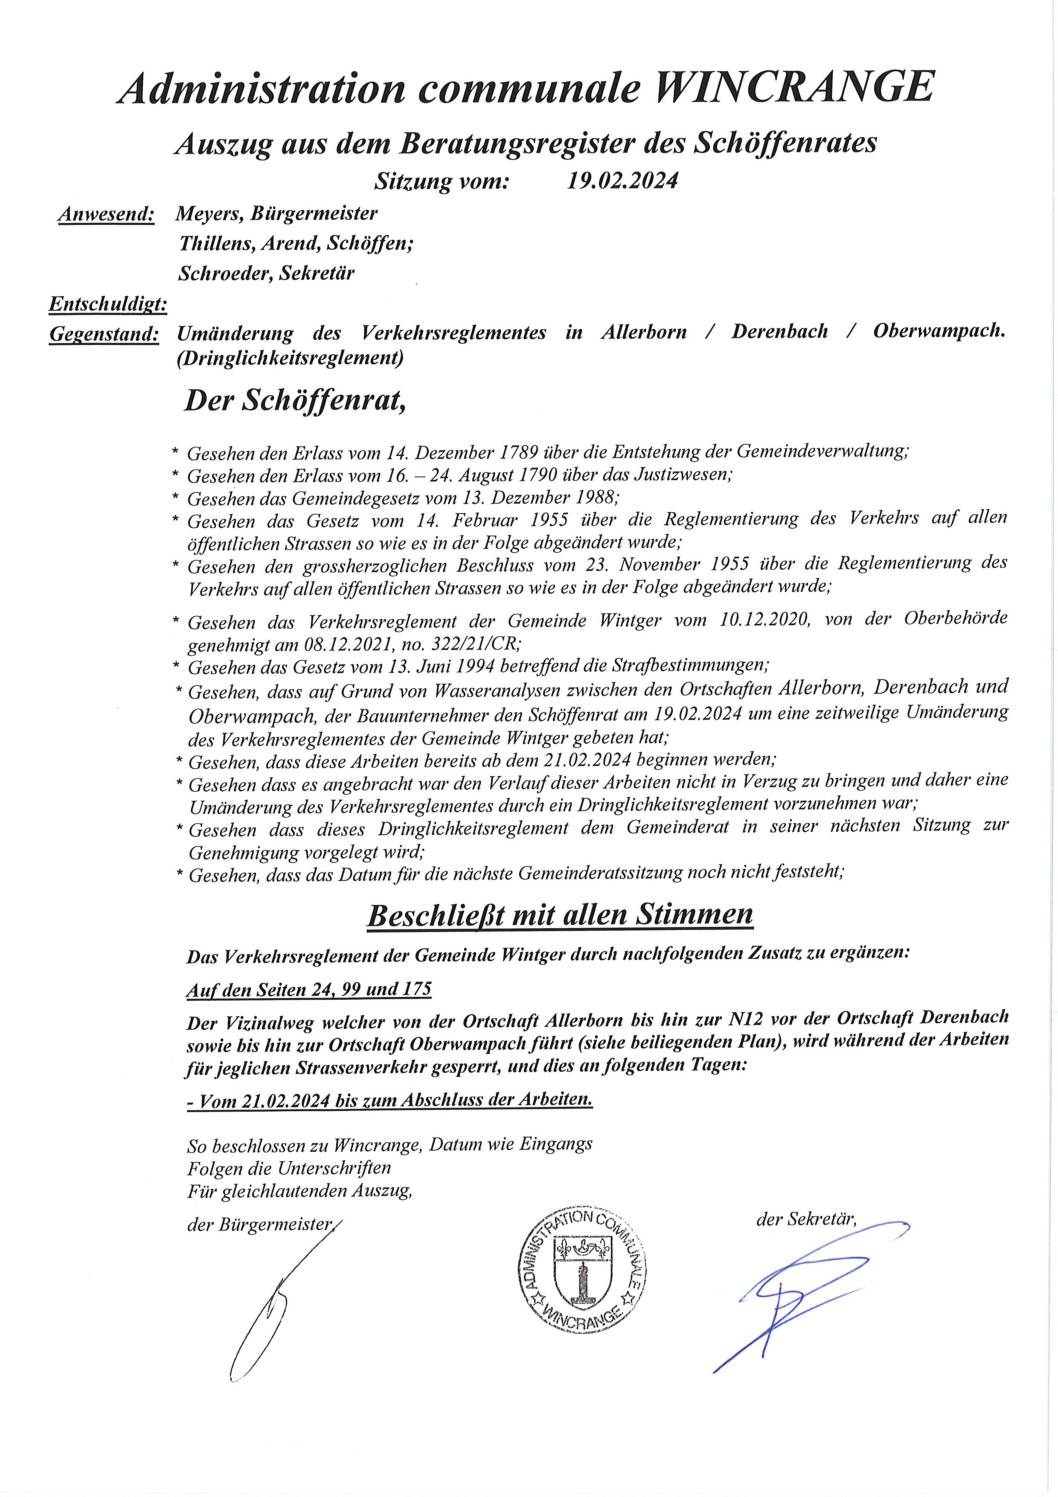 Allerborn-Derenbach-Oberwampach chemin barré à toute circulation à partir du 21.02.2024